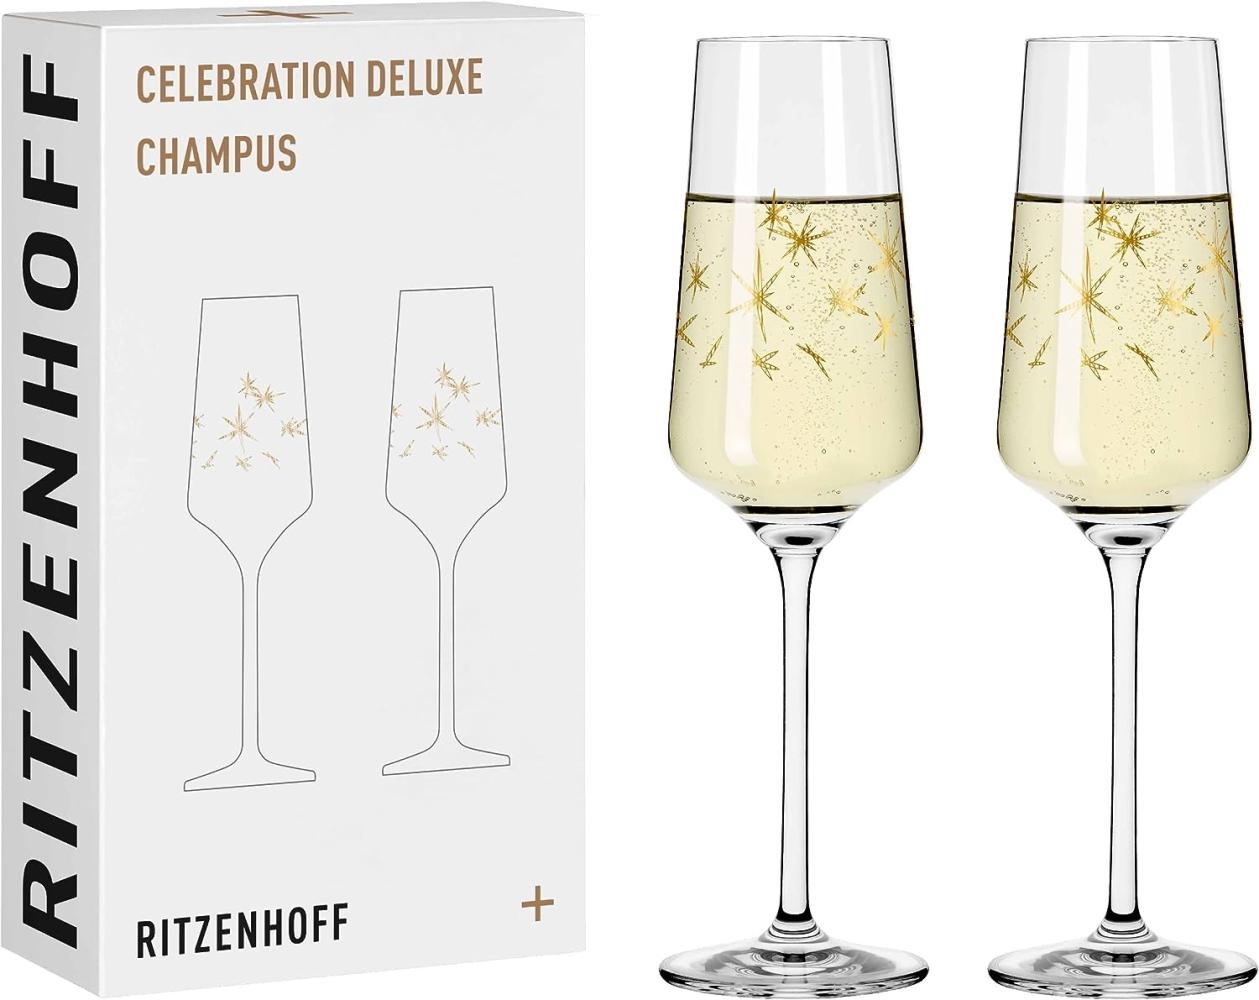 Ritzenhoff 6141014 Champagnerglas-Set #3 CELEBRATION DELUXE Romi Bohnenberg 2022 Bild 1